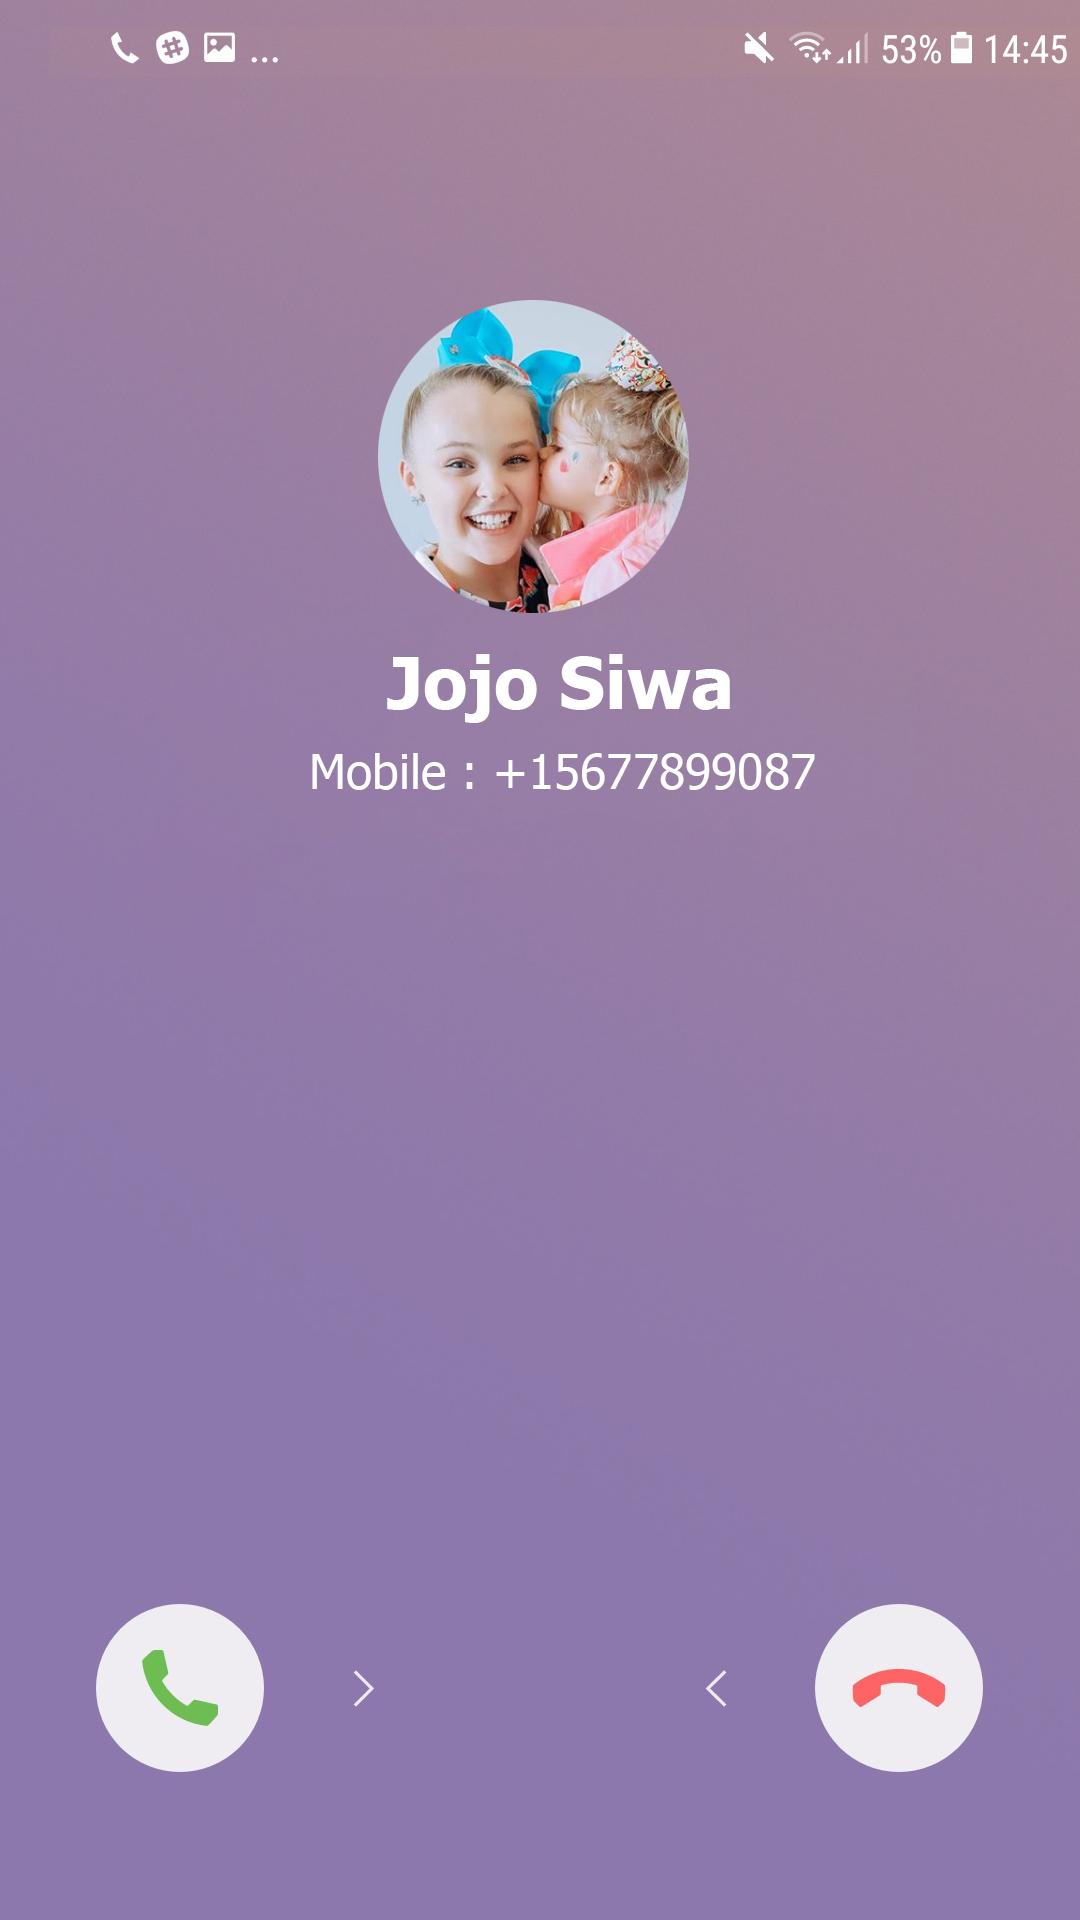 Video Call From Jojo Siwa For Android Apk Download - roblox id jojo siwa